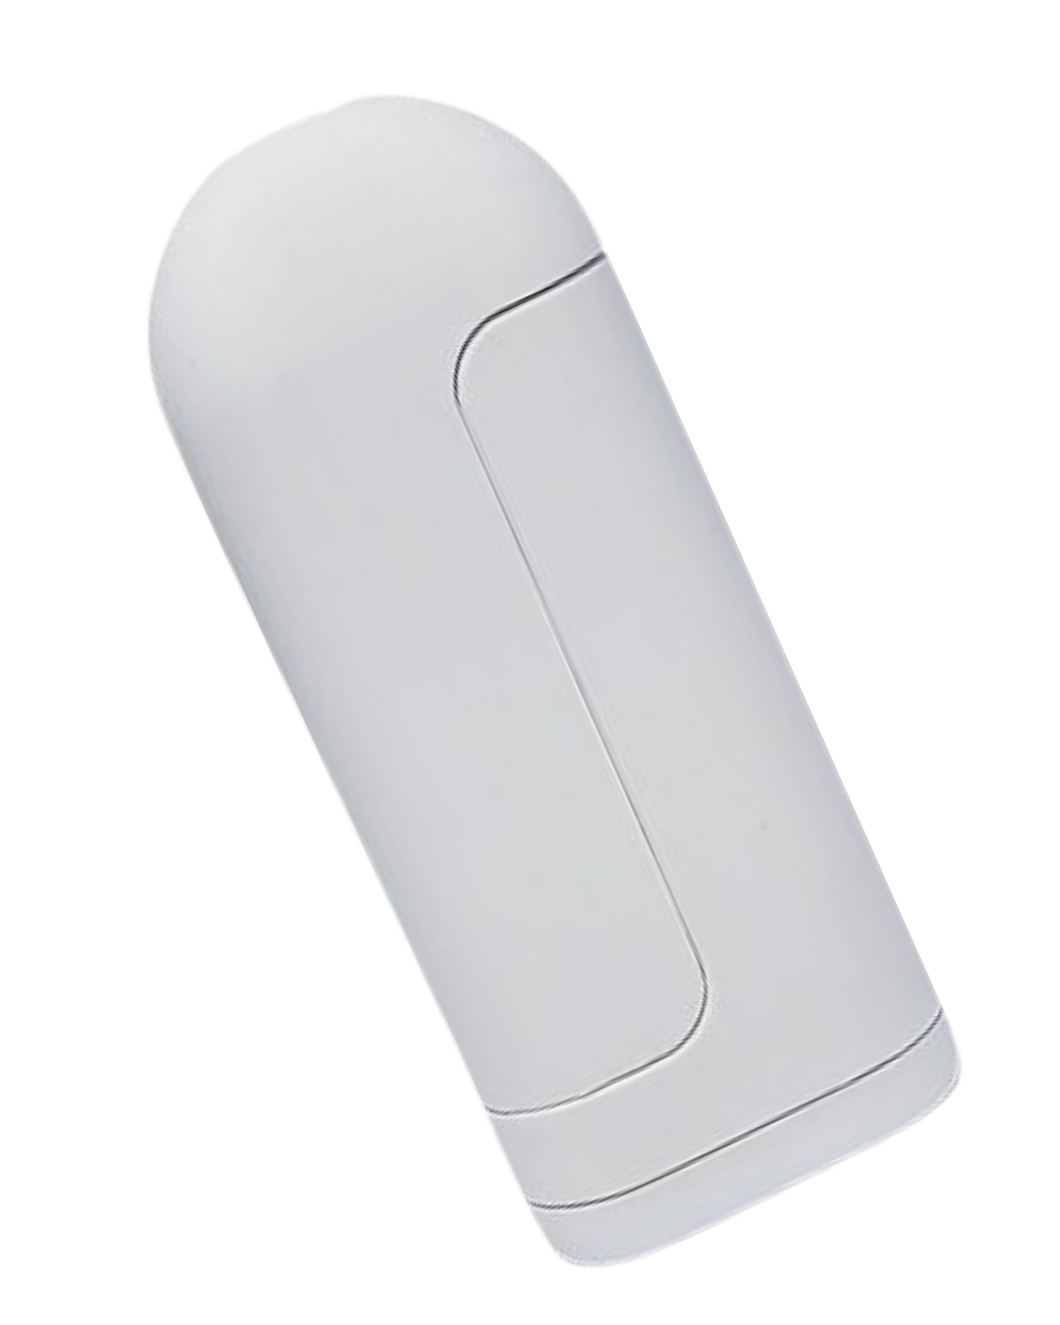 A White Cloak Battery.